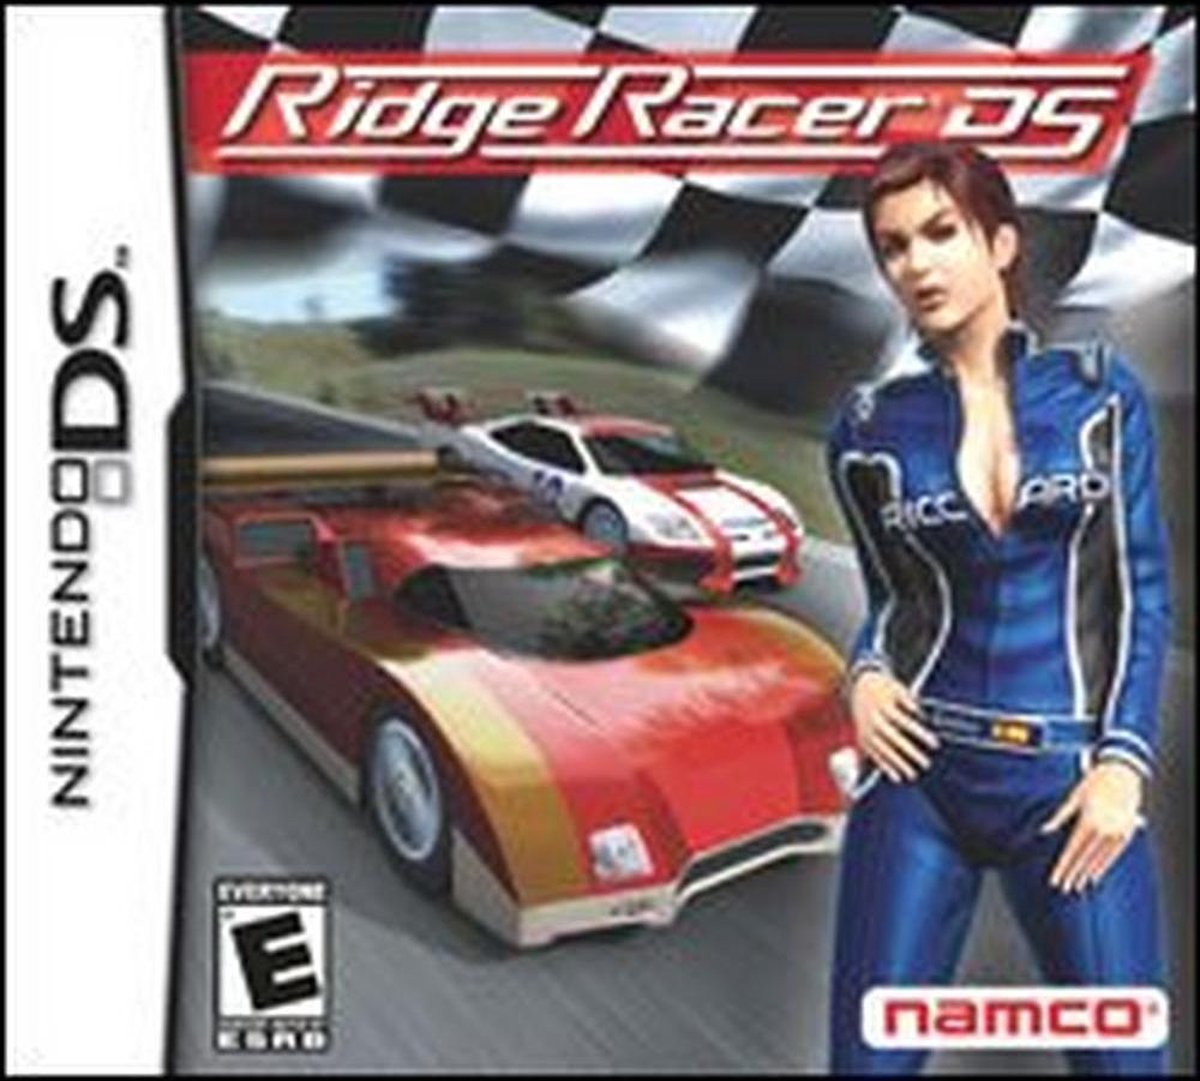 Namco Ridge Racer DS